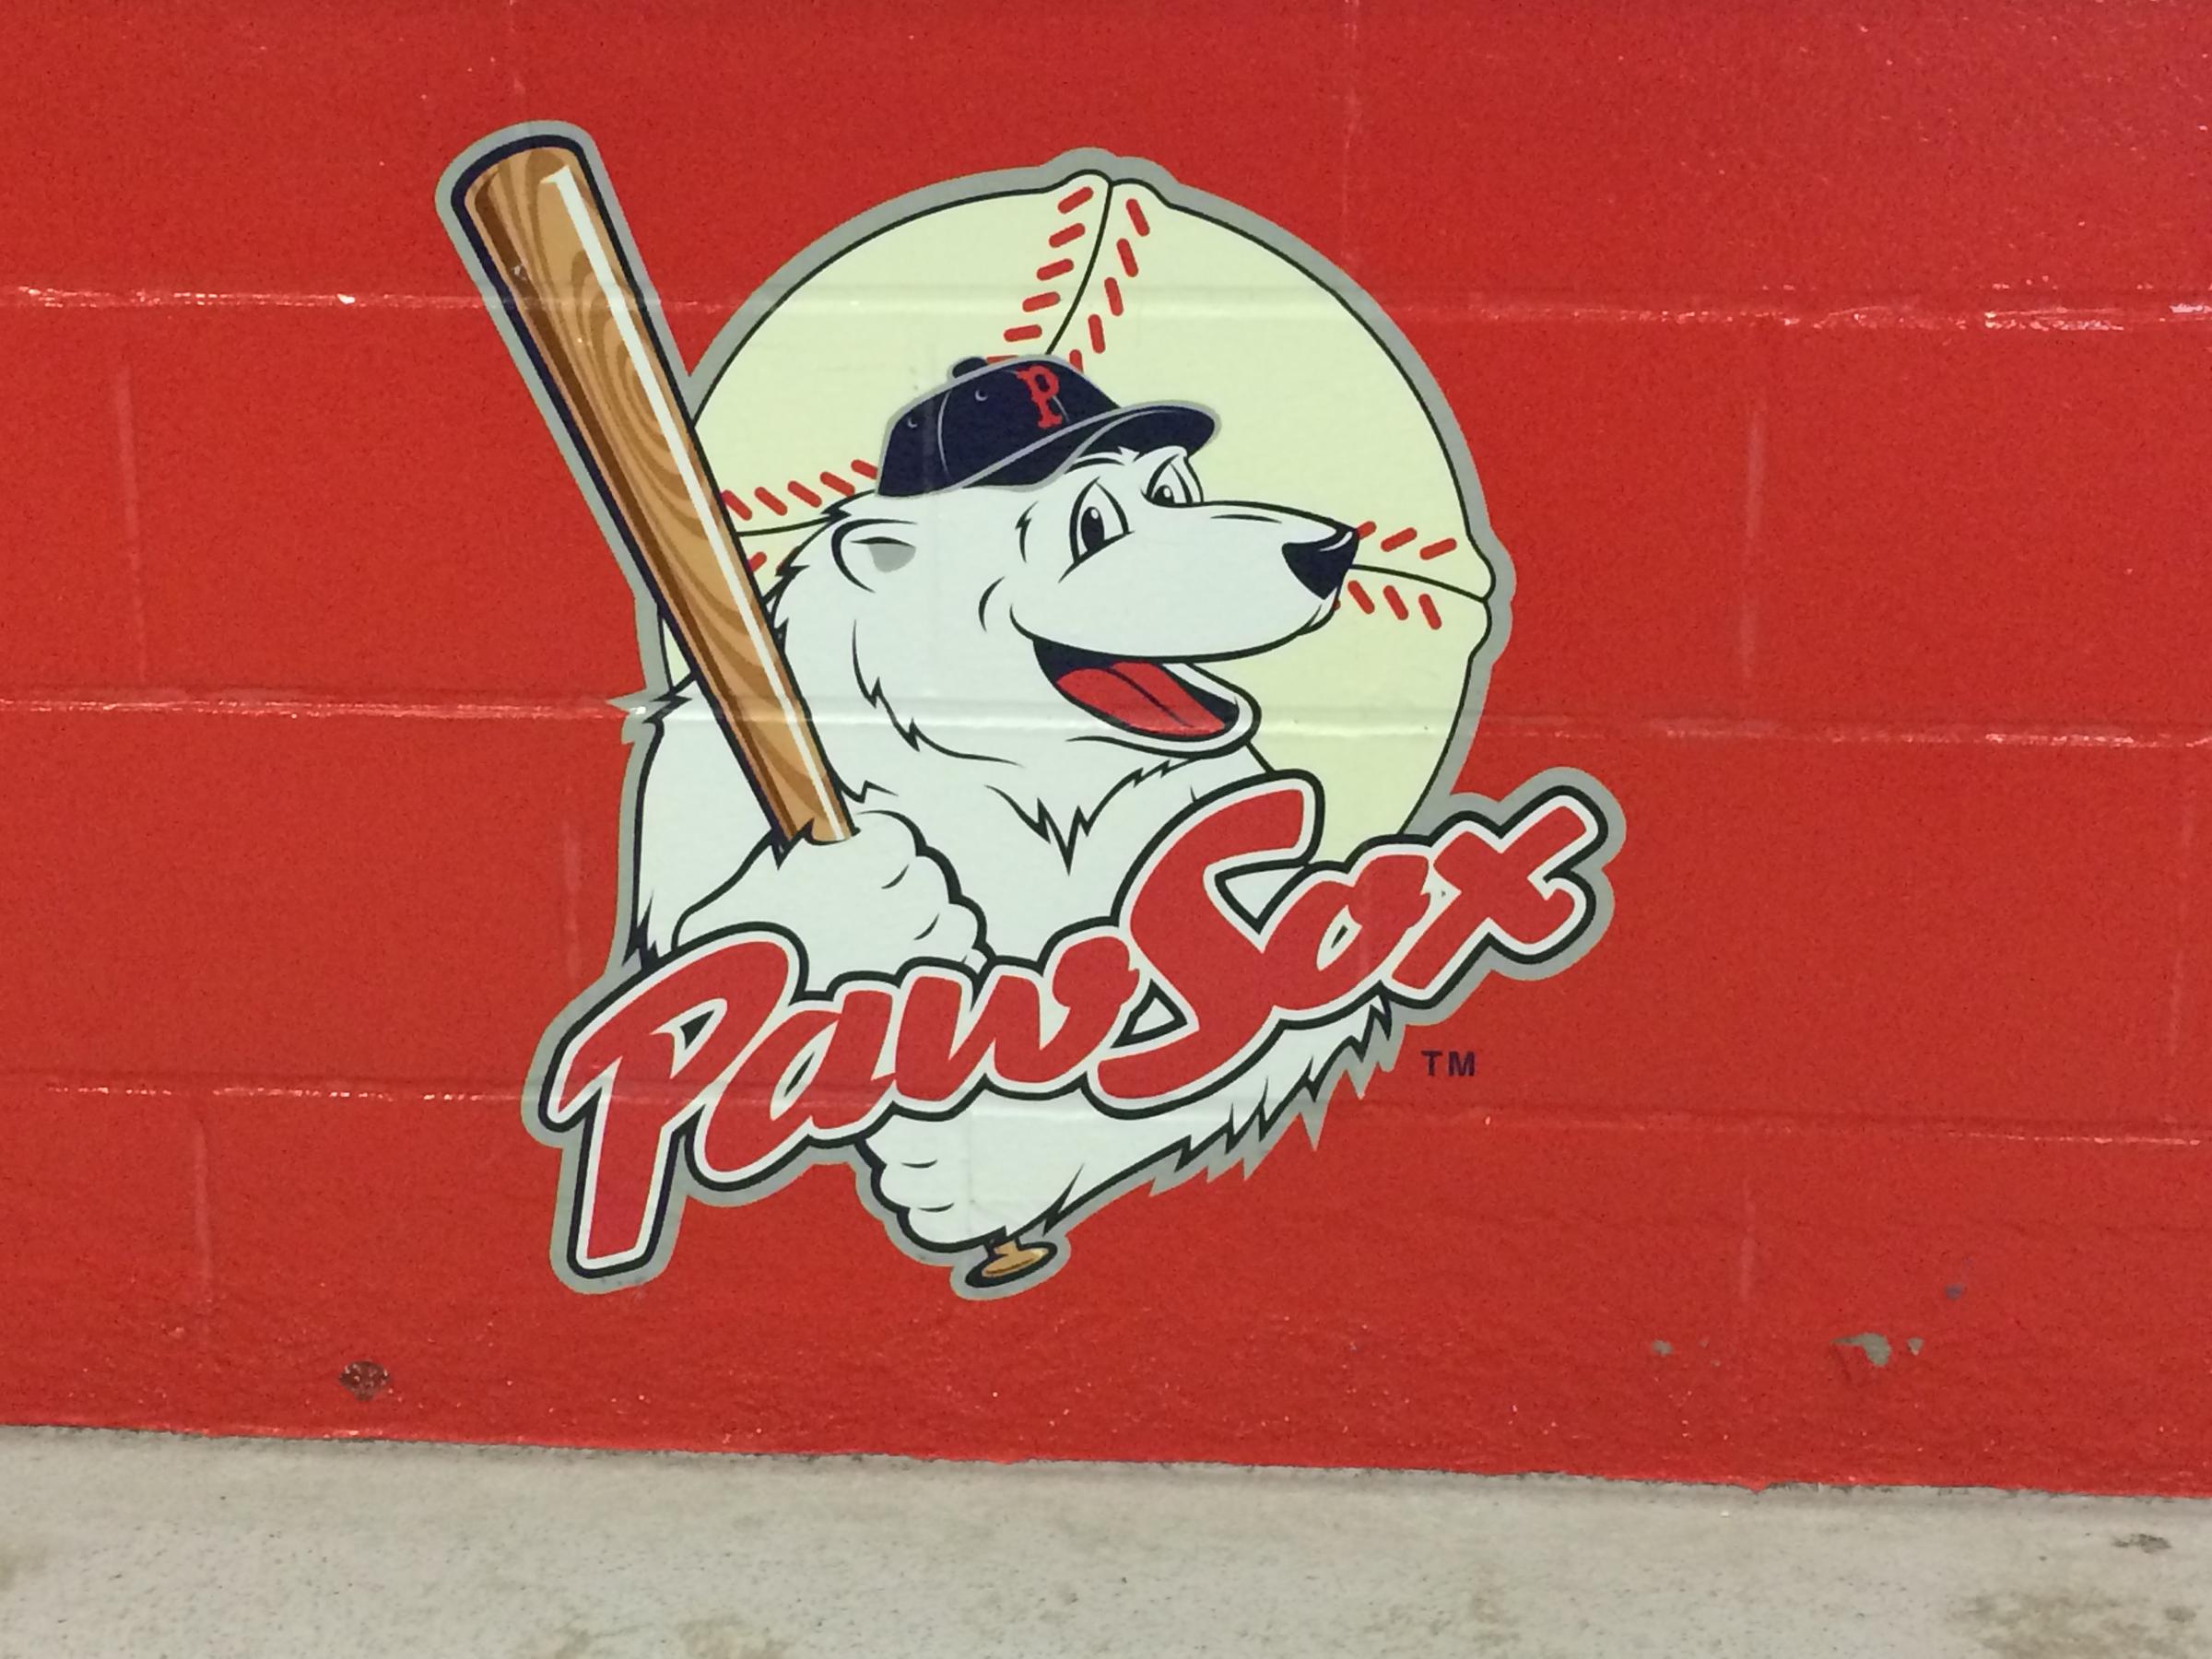 PawSox Logo - For PawSox Fans, Pawtucket Residents, Team Loss Is 'Devastating ...